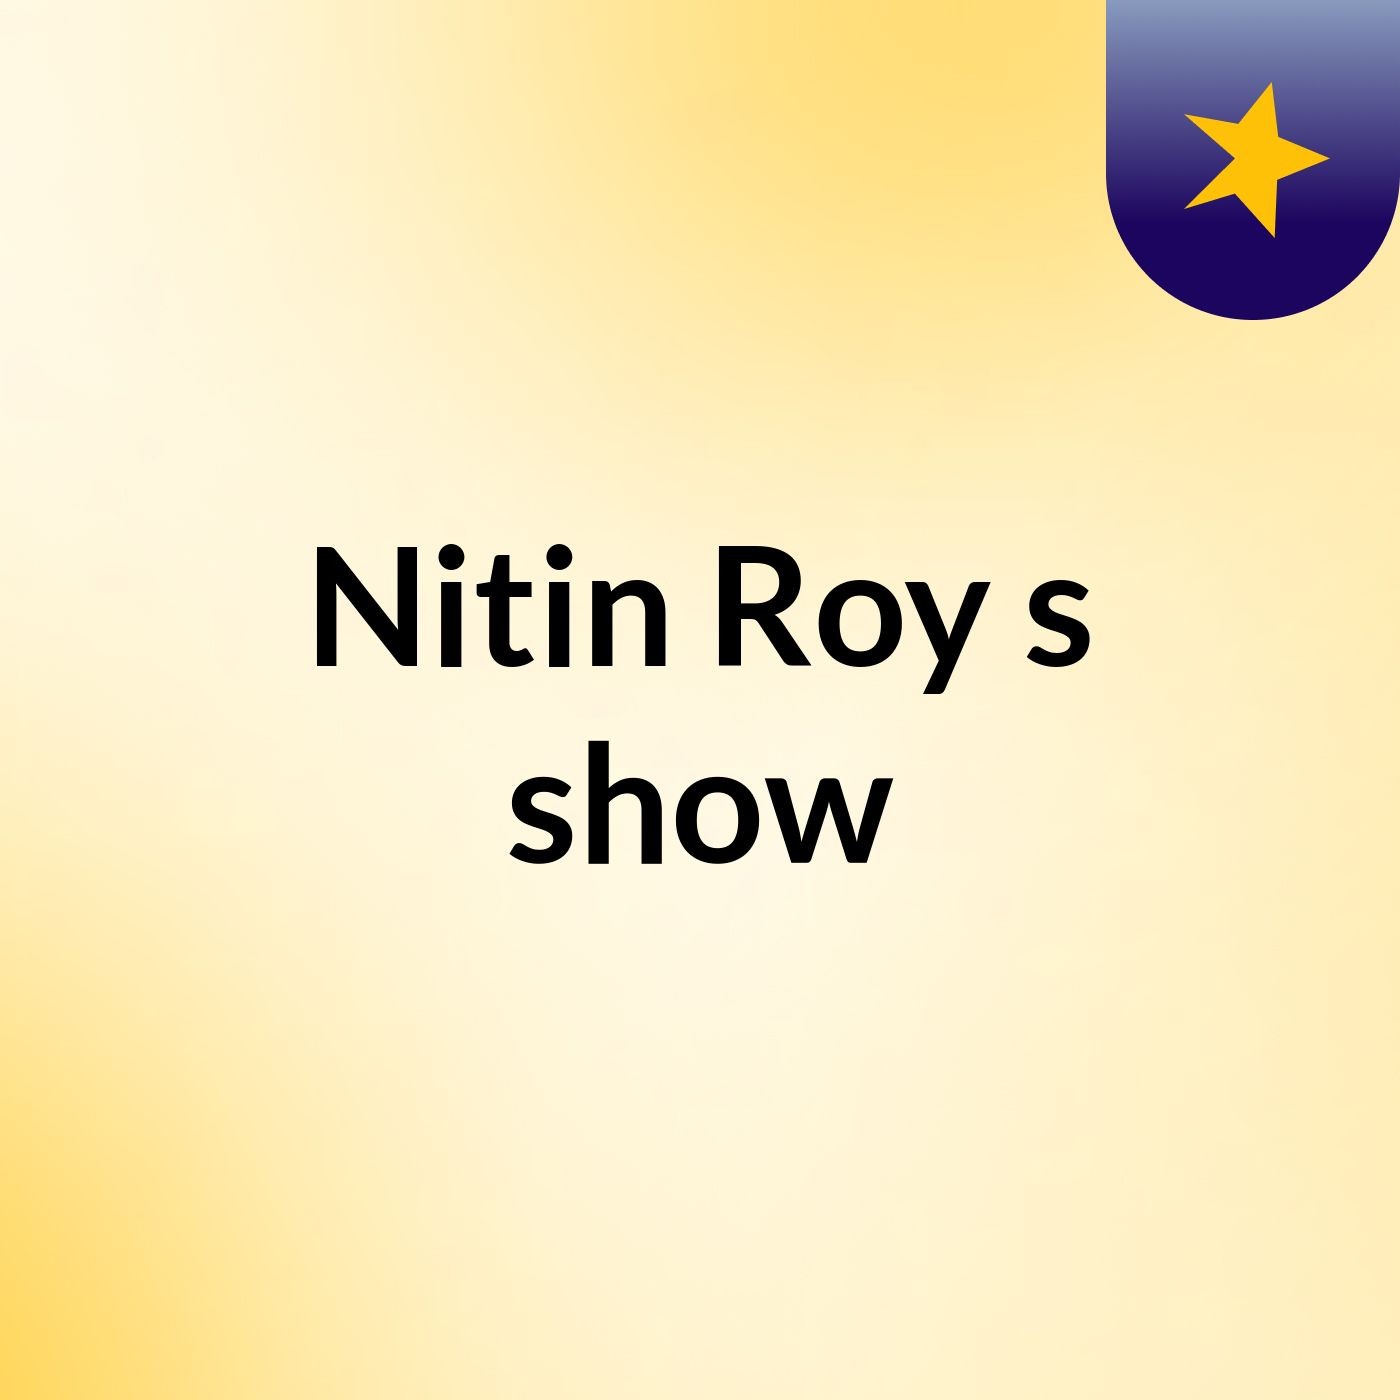 Nitin Roy's show